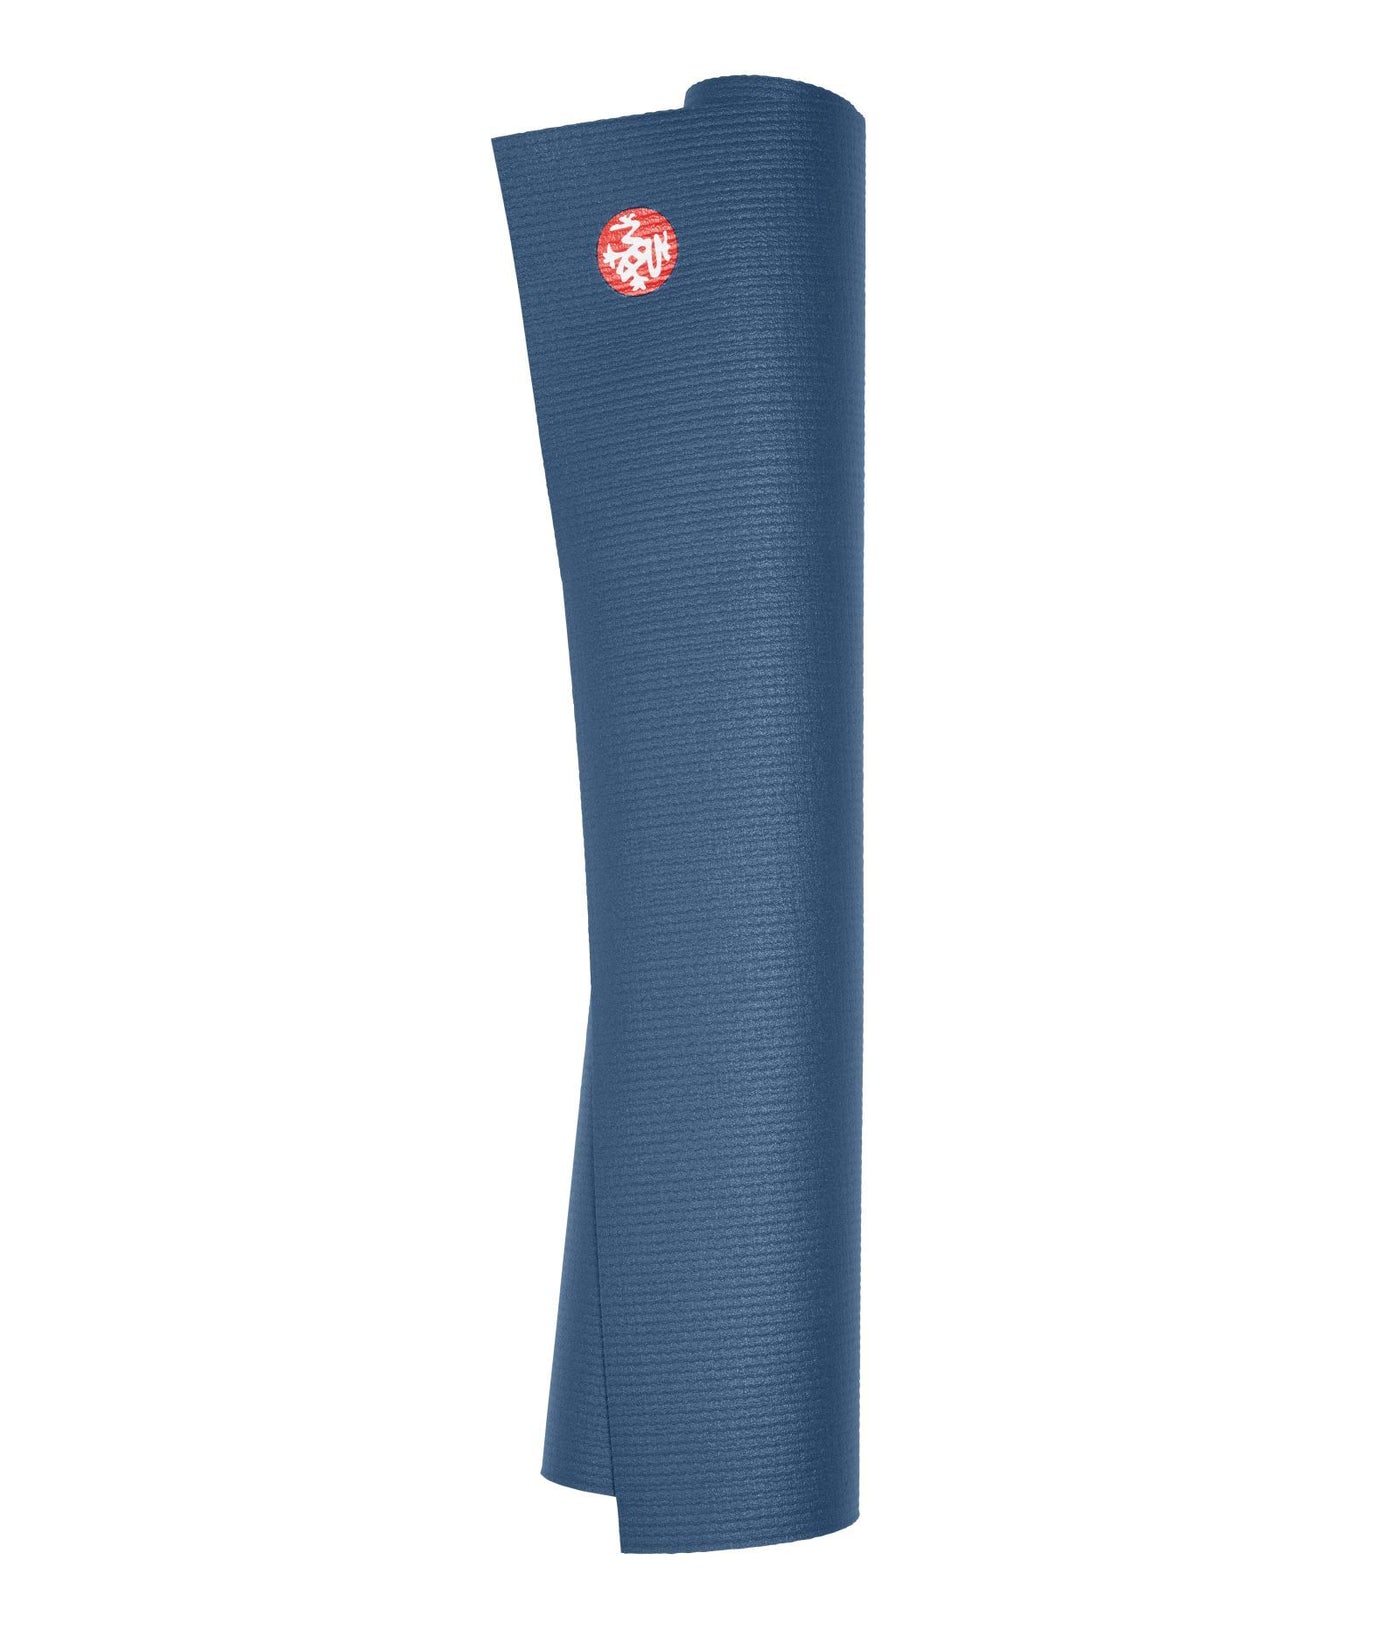 NWT Manduka - PRO Travel Yoga Mat, 71x24x2.5mm MULTIPLE COLORS AVAILABLE  !